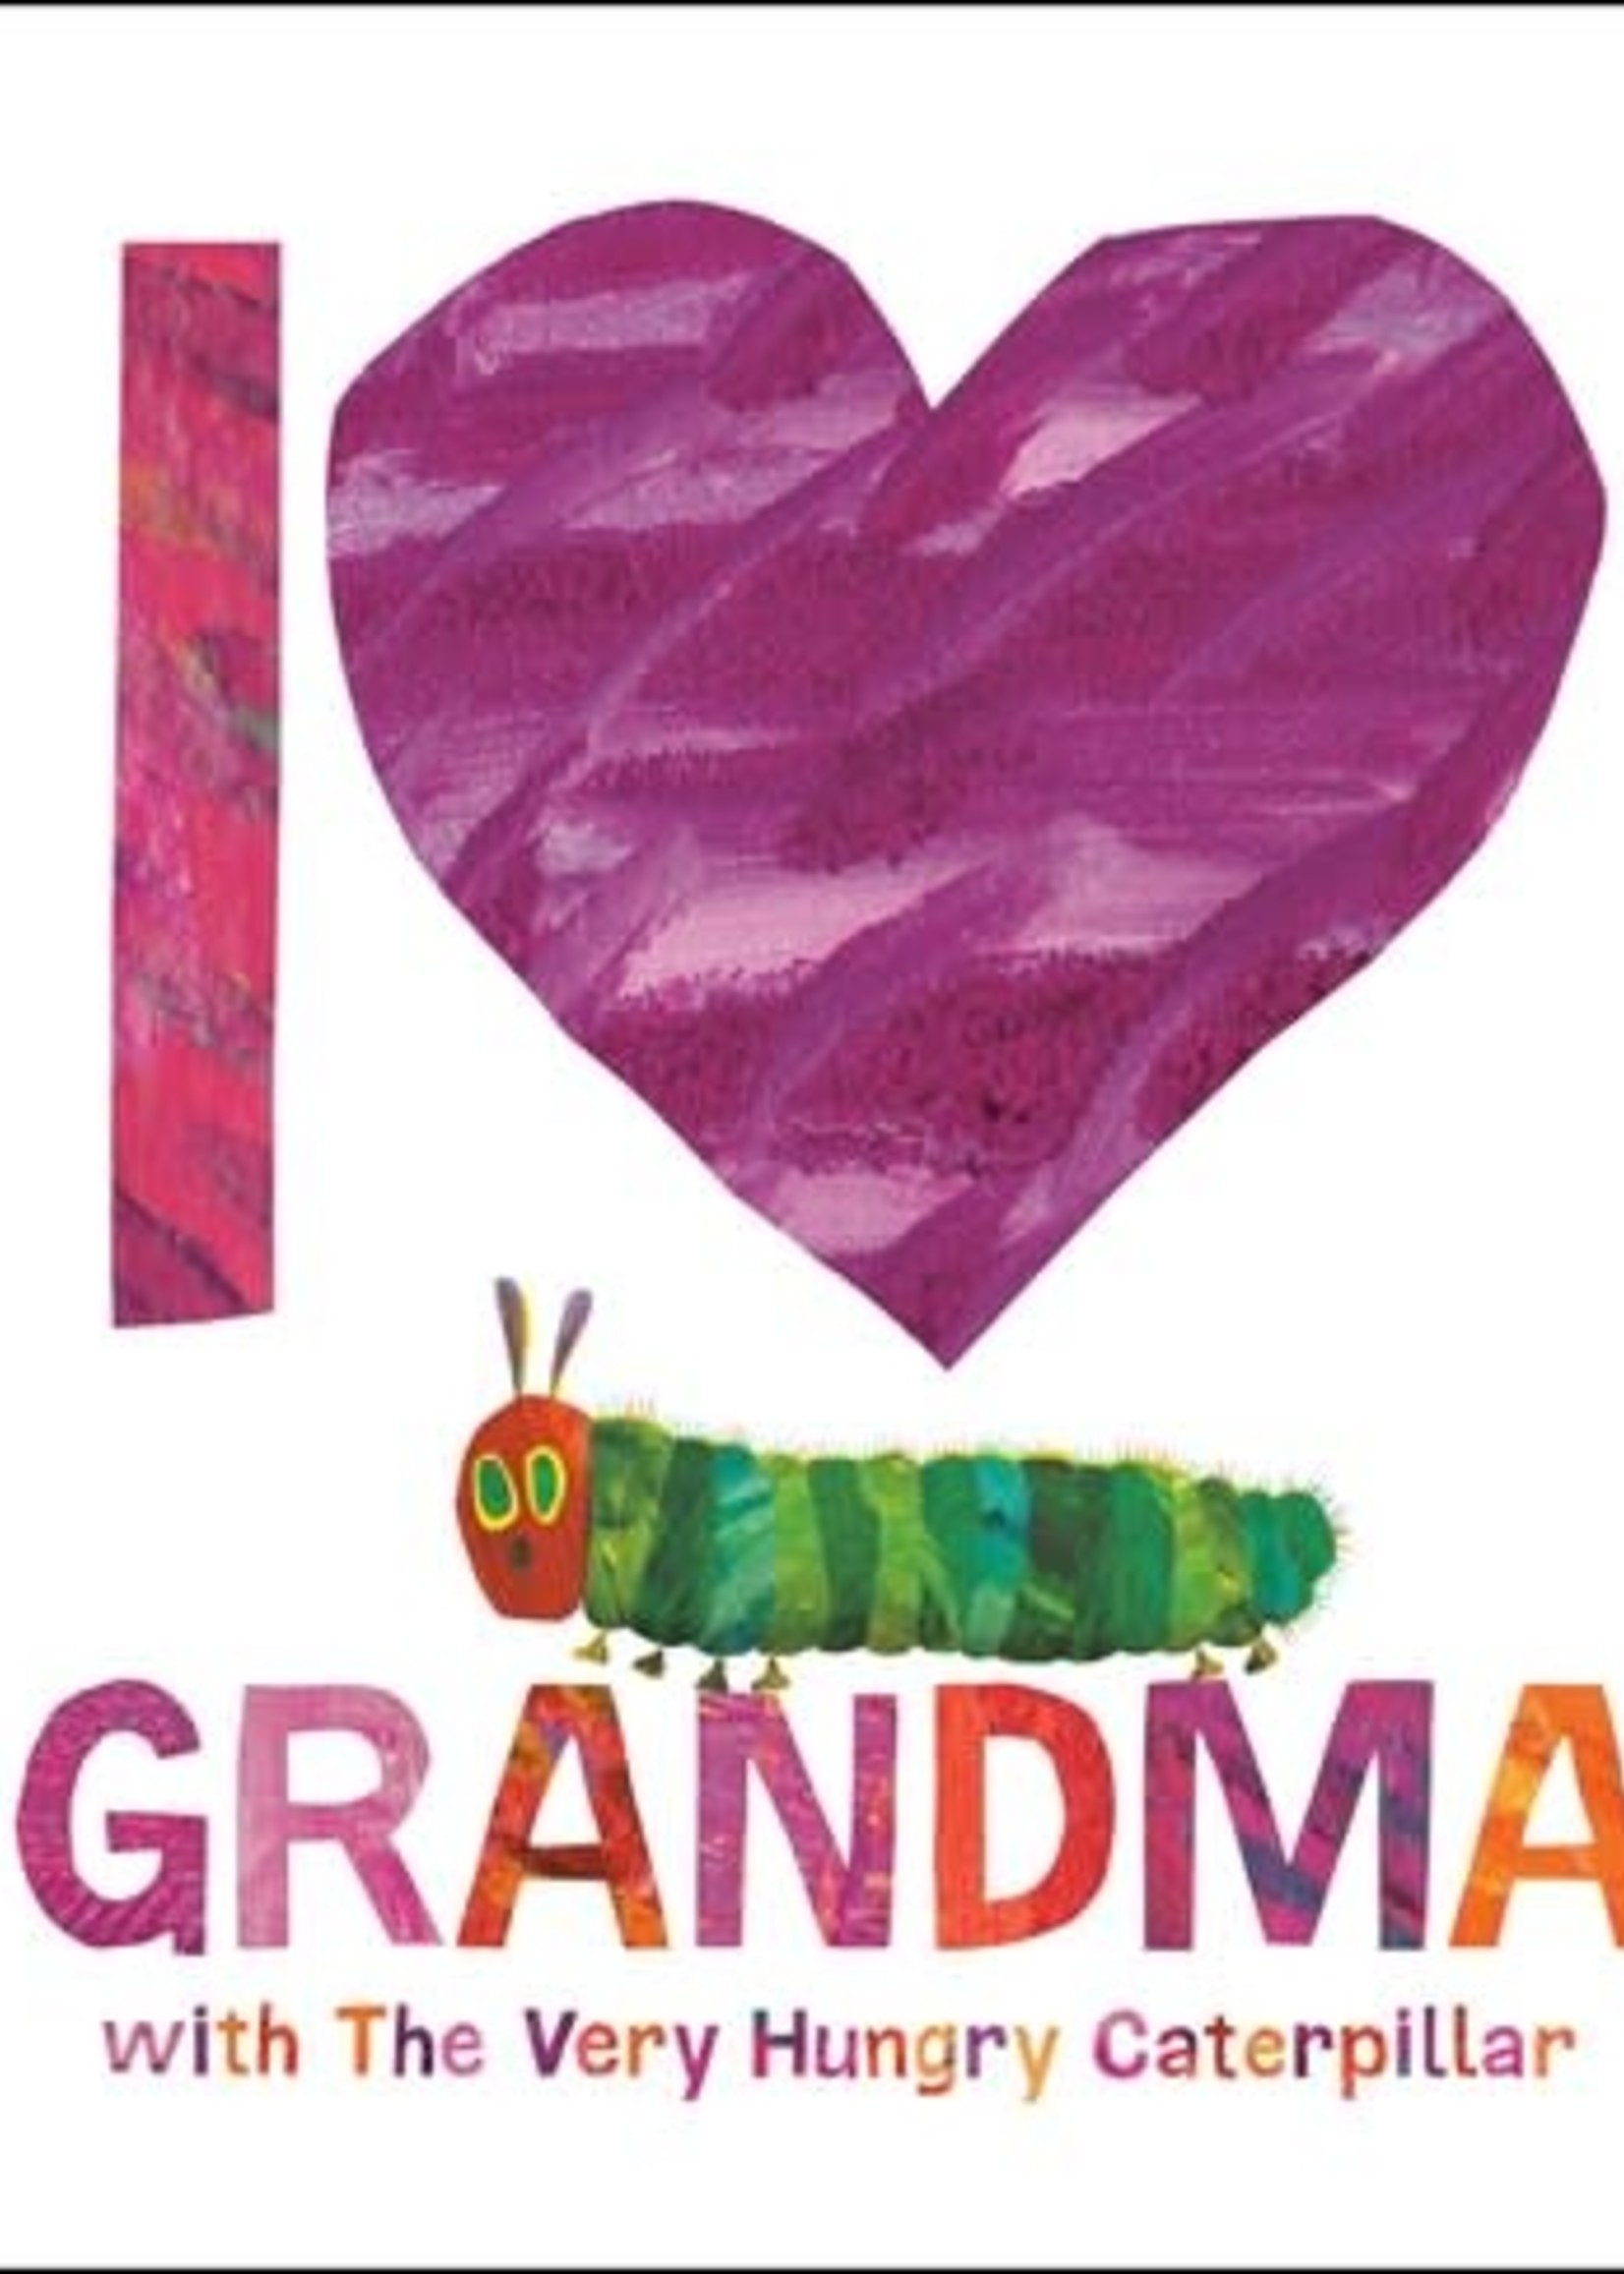 I Love Grandma with the Very Hungry Caterpillar